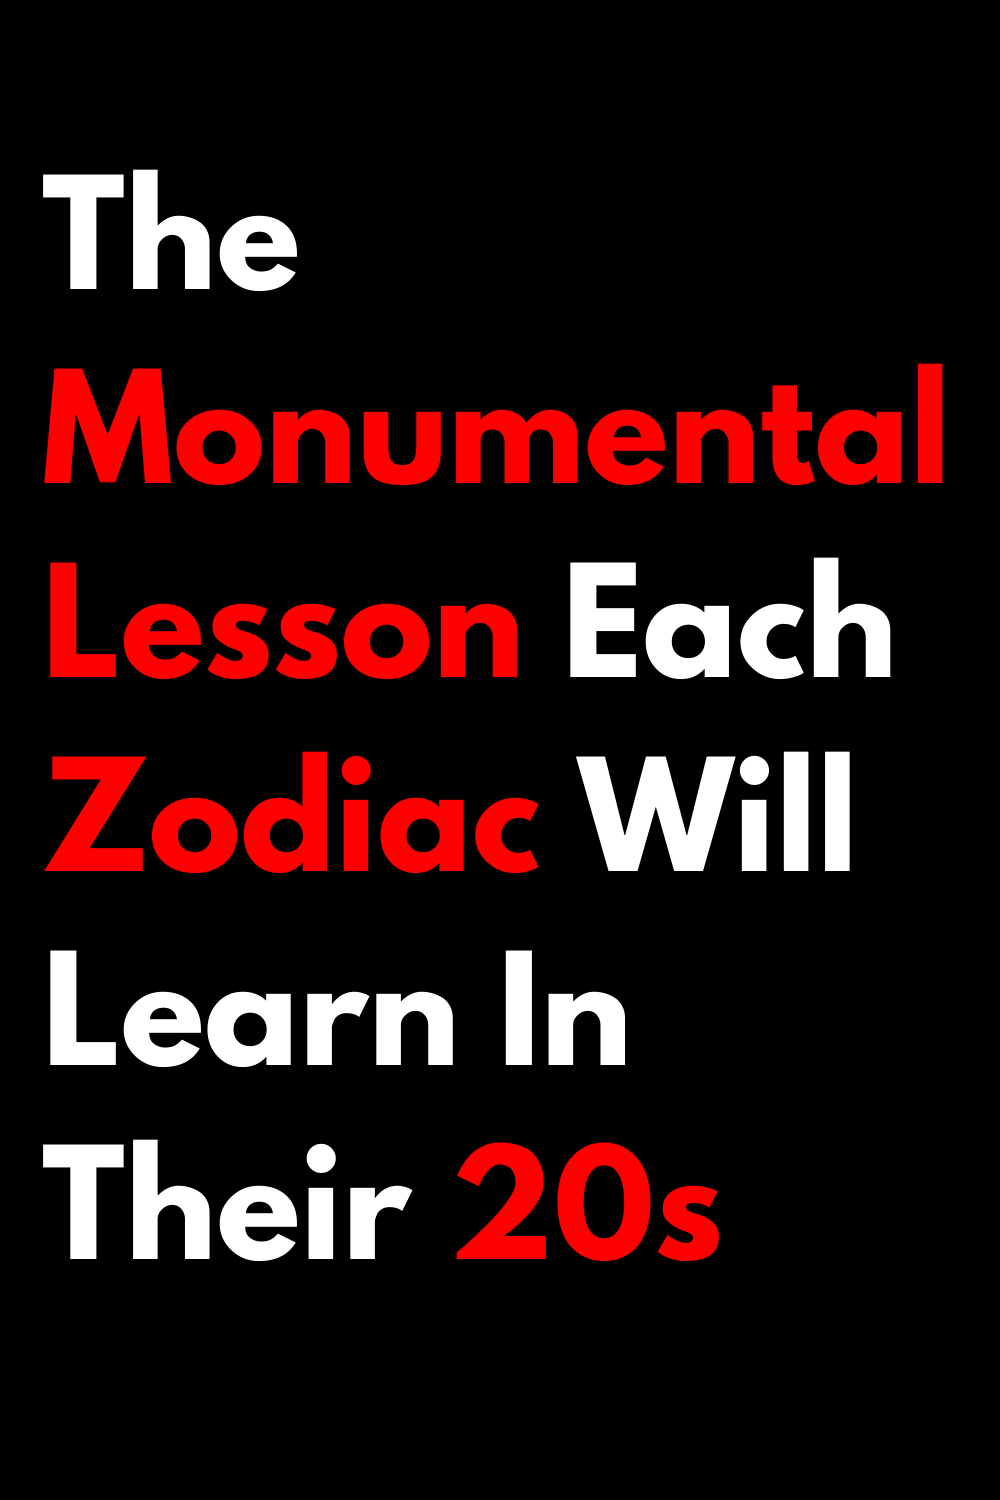 The Monumental Lesson Each Zodiac Will Learn In Their 20s